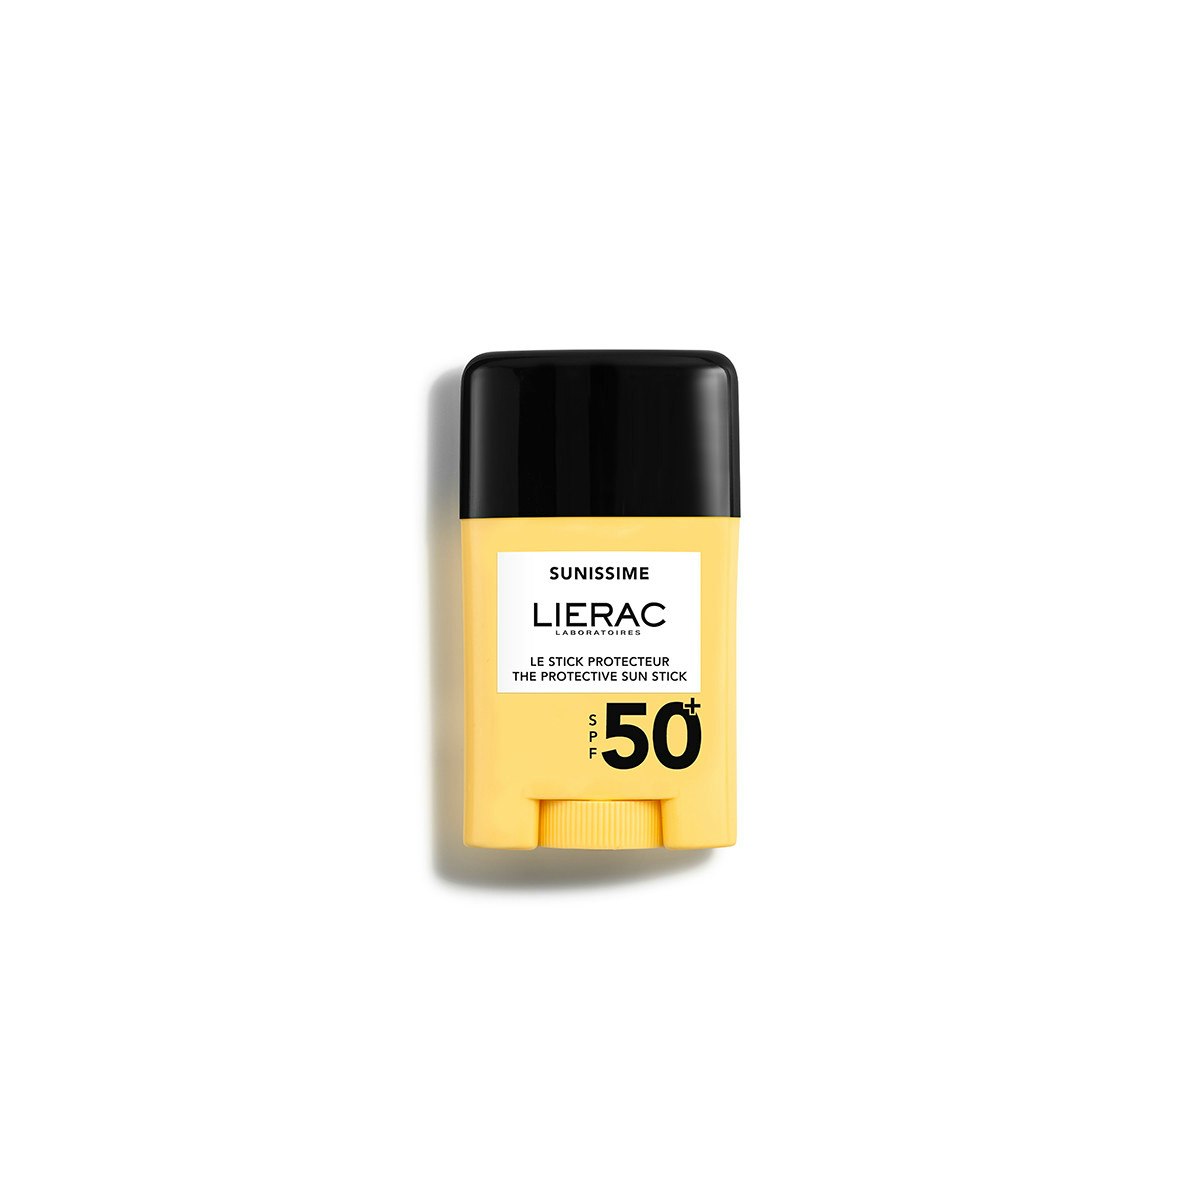 Lierac SUNISSIME Anti-Aging Sonnenstick SPF 50+ - 10 g 